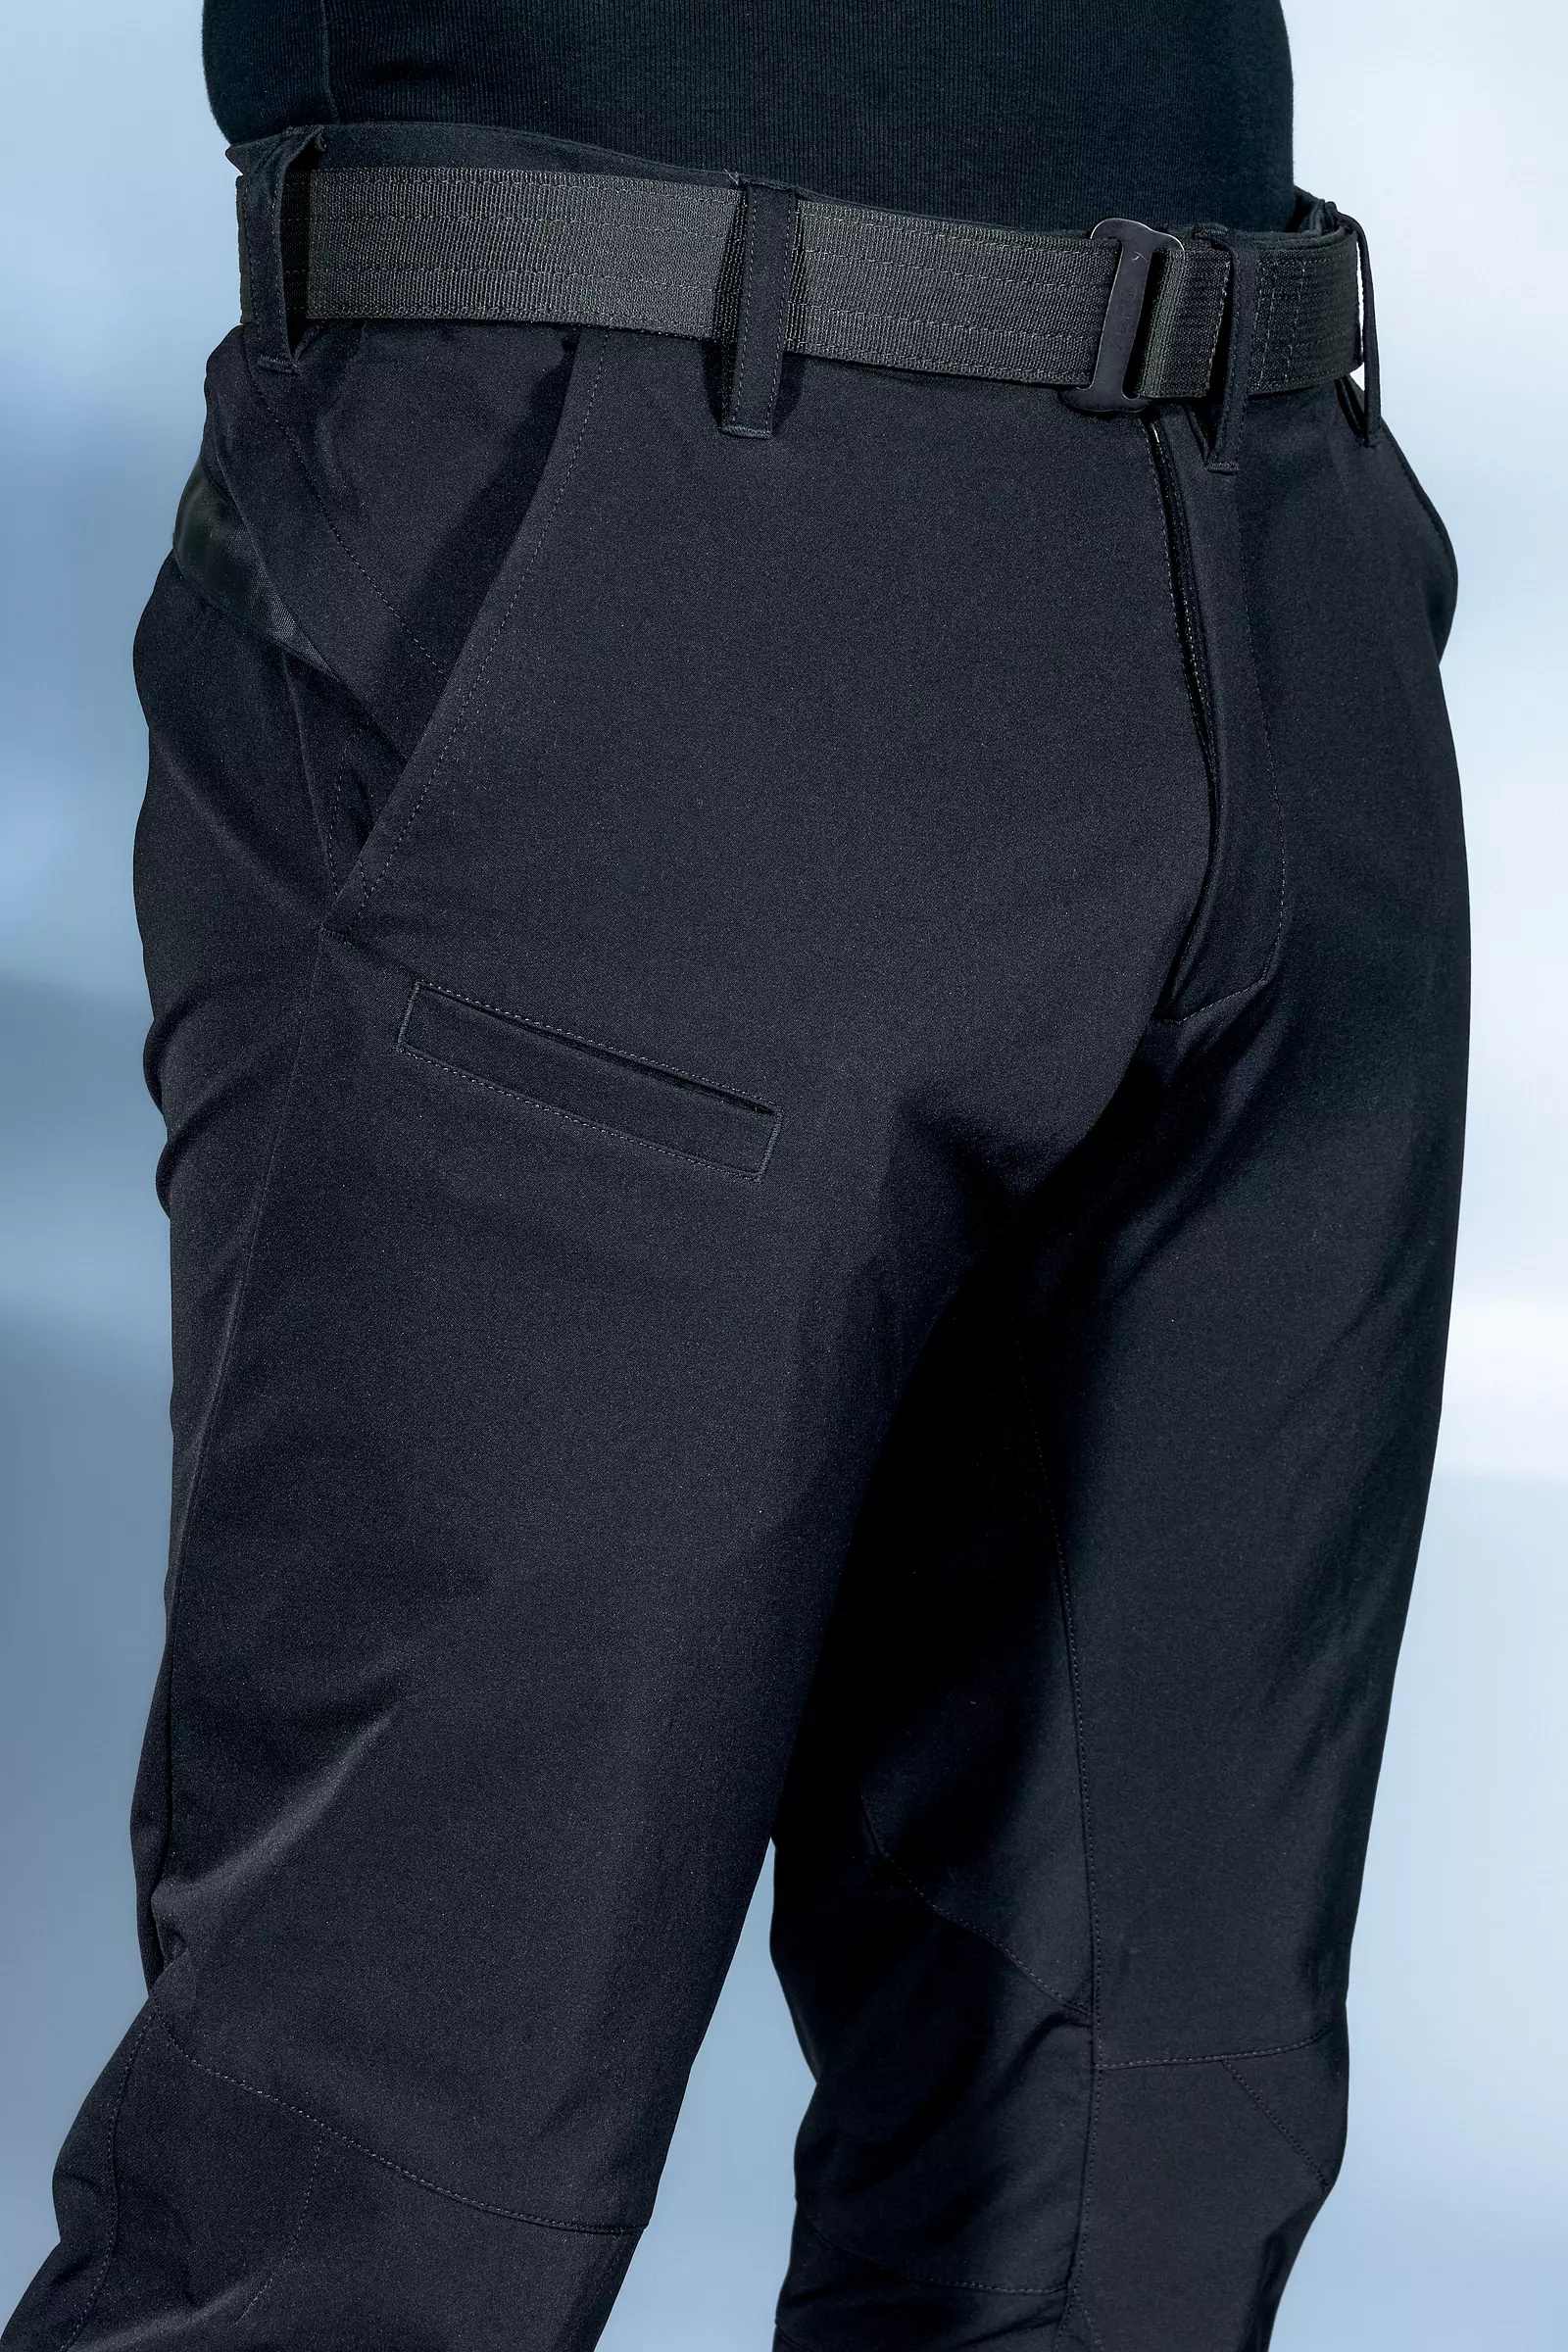 P10-DS schoeller® Dryskin™ Articulated Pant Black - 18